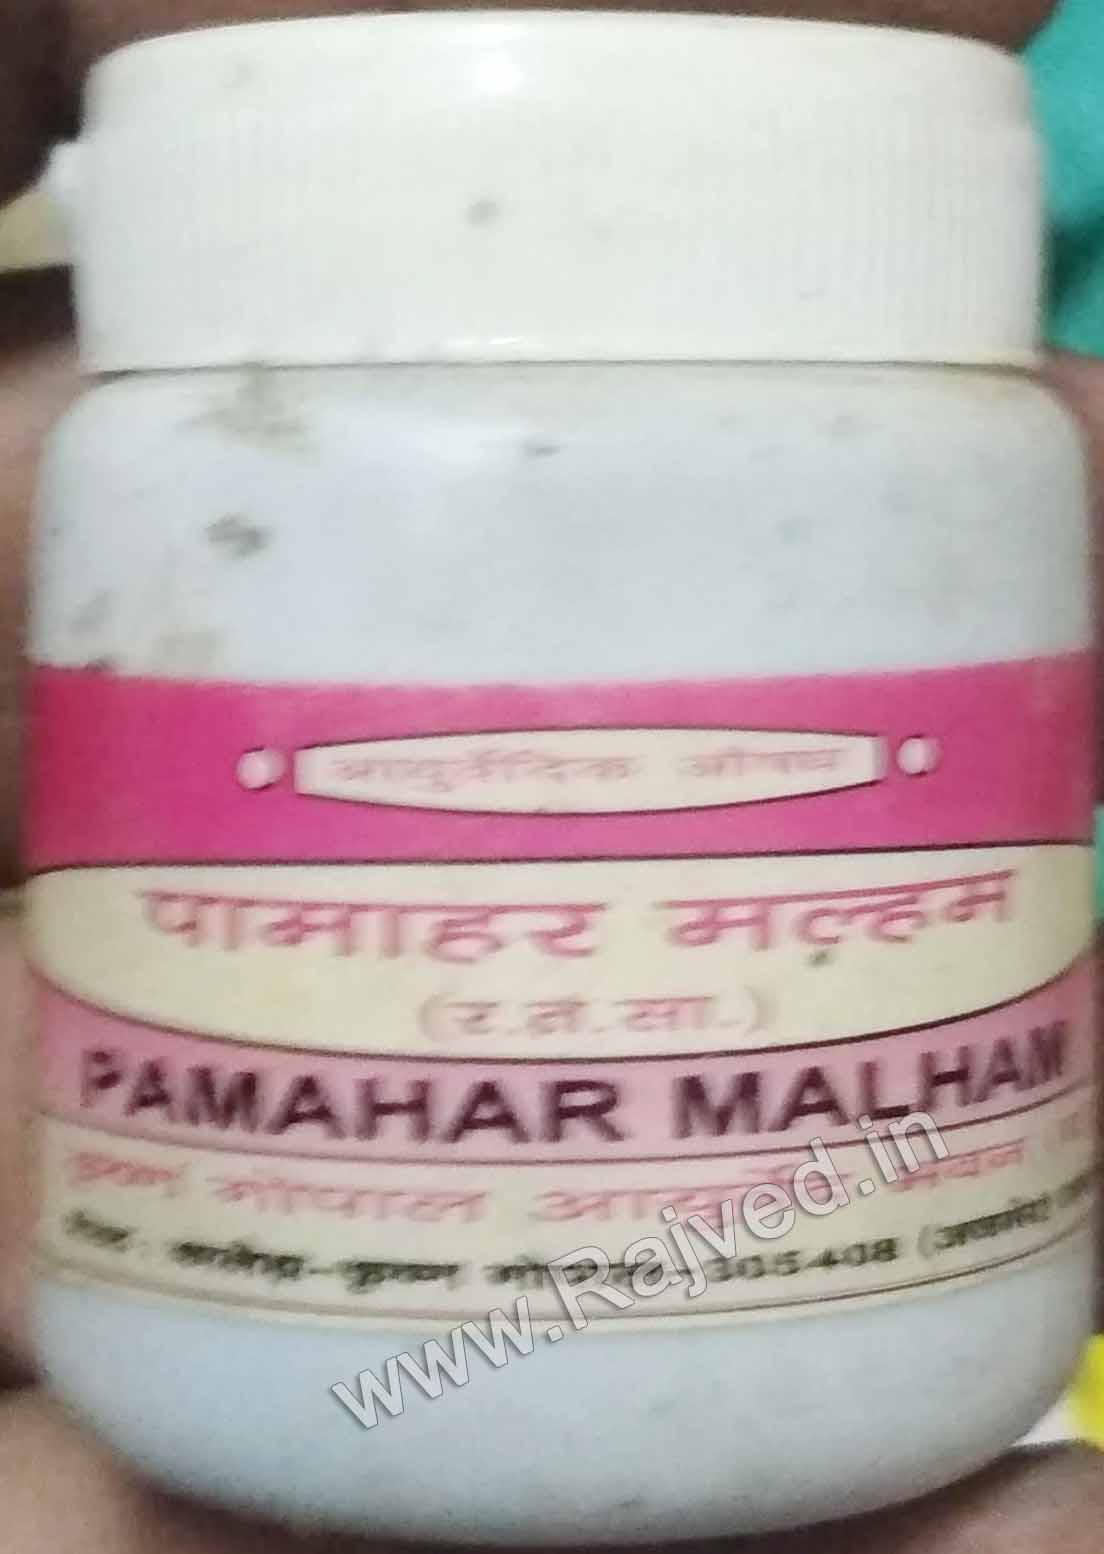 pamahar malham 25gm upto 20% off krishna gopal ayurved bhavan